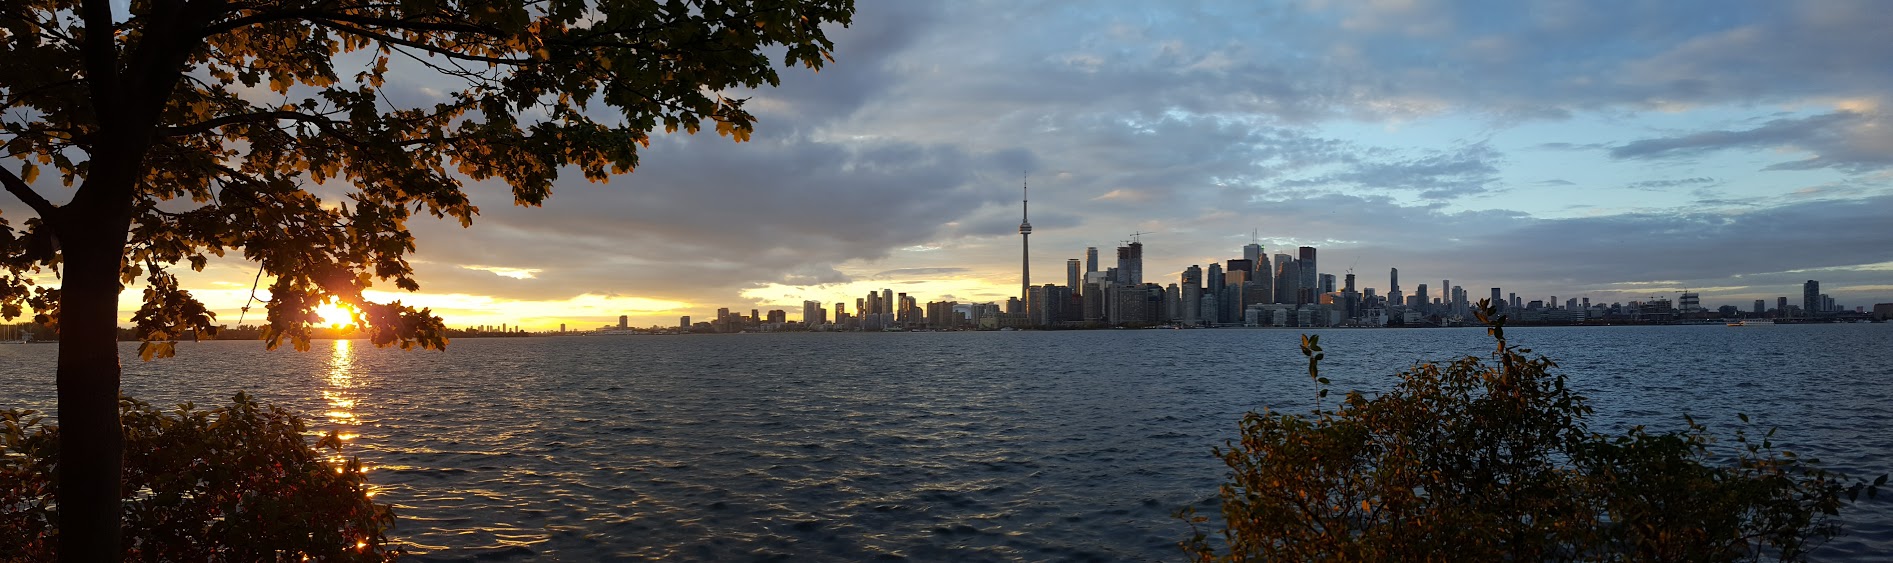 Skyline vanaf Toronto Island